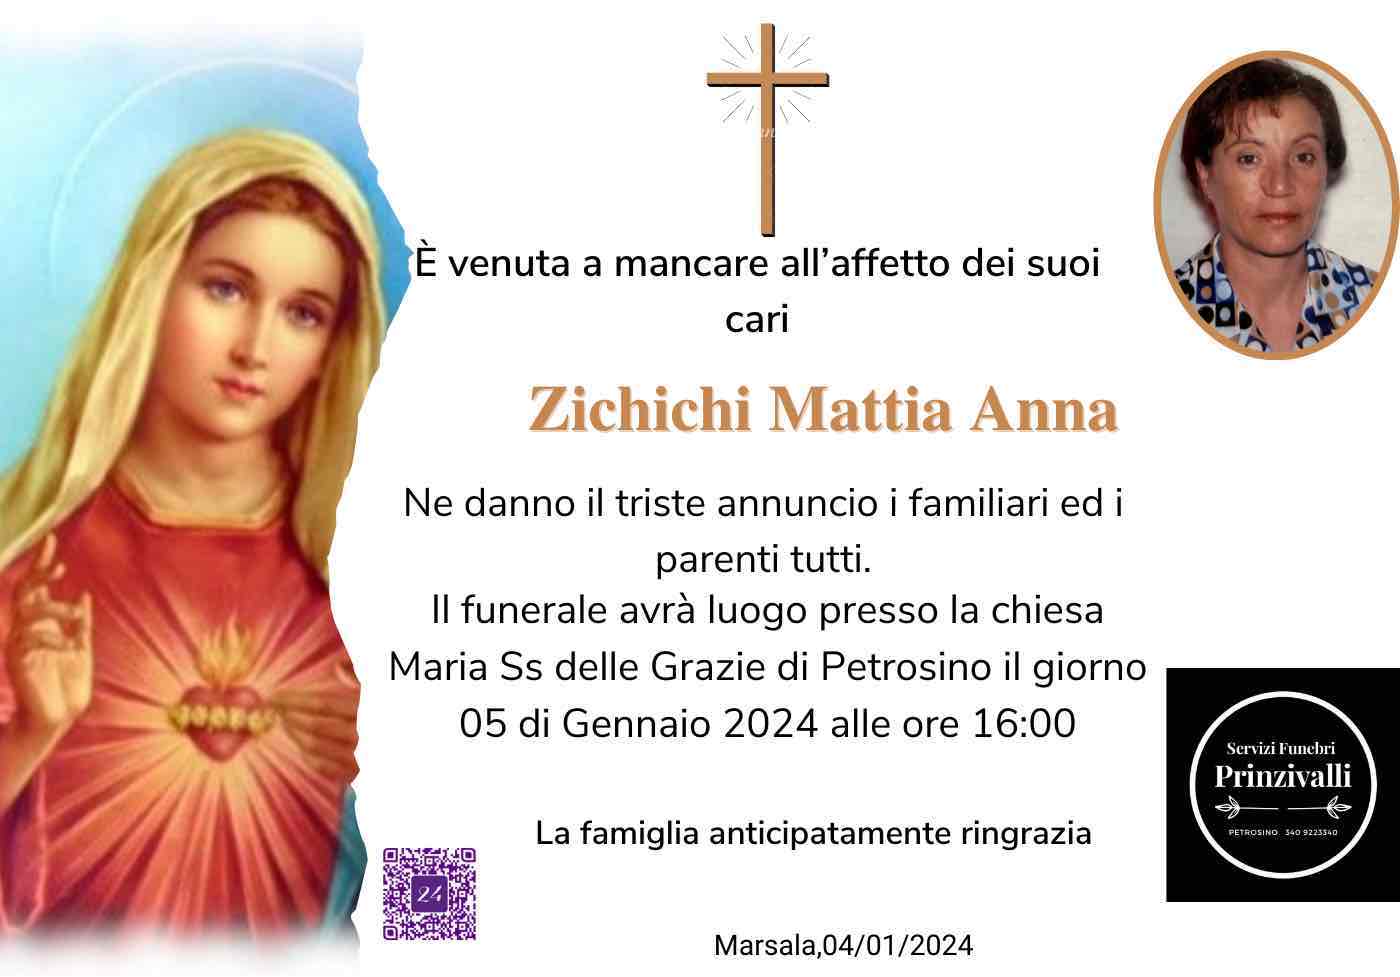 Mattia Anna Zichichi